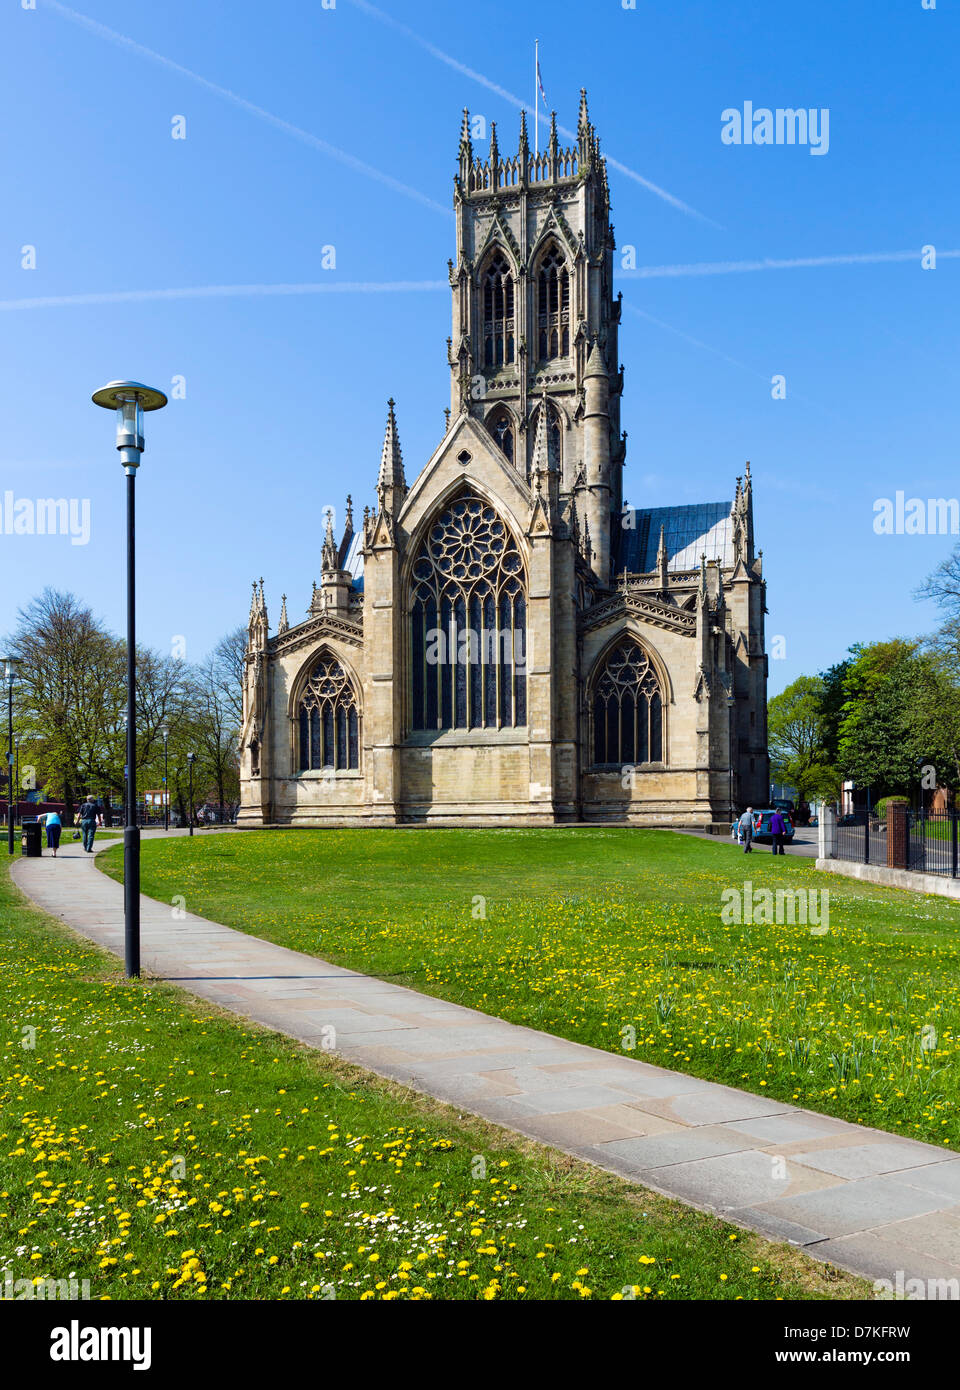 St George's Minster, Doncaster, South Yorkshire, Inglaterra, Reino Unido. Foto de stock